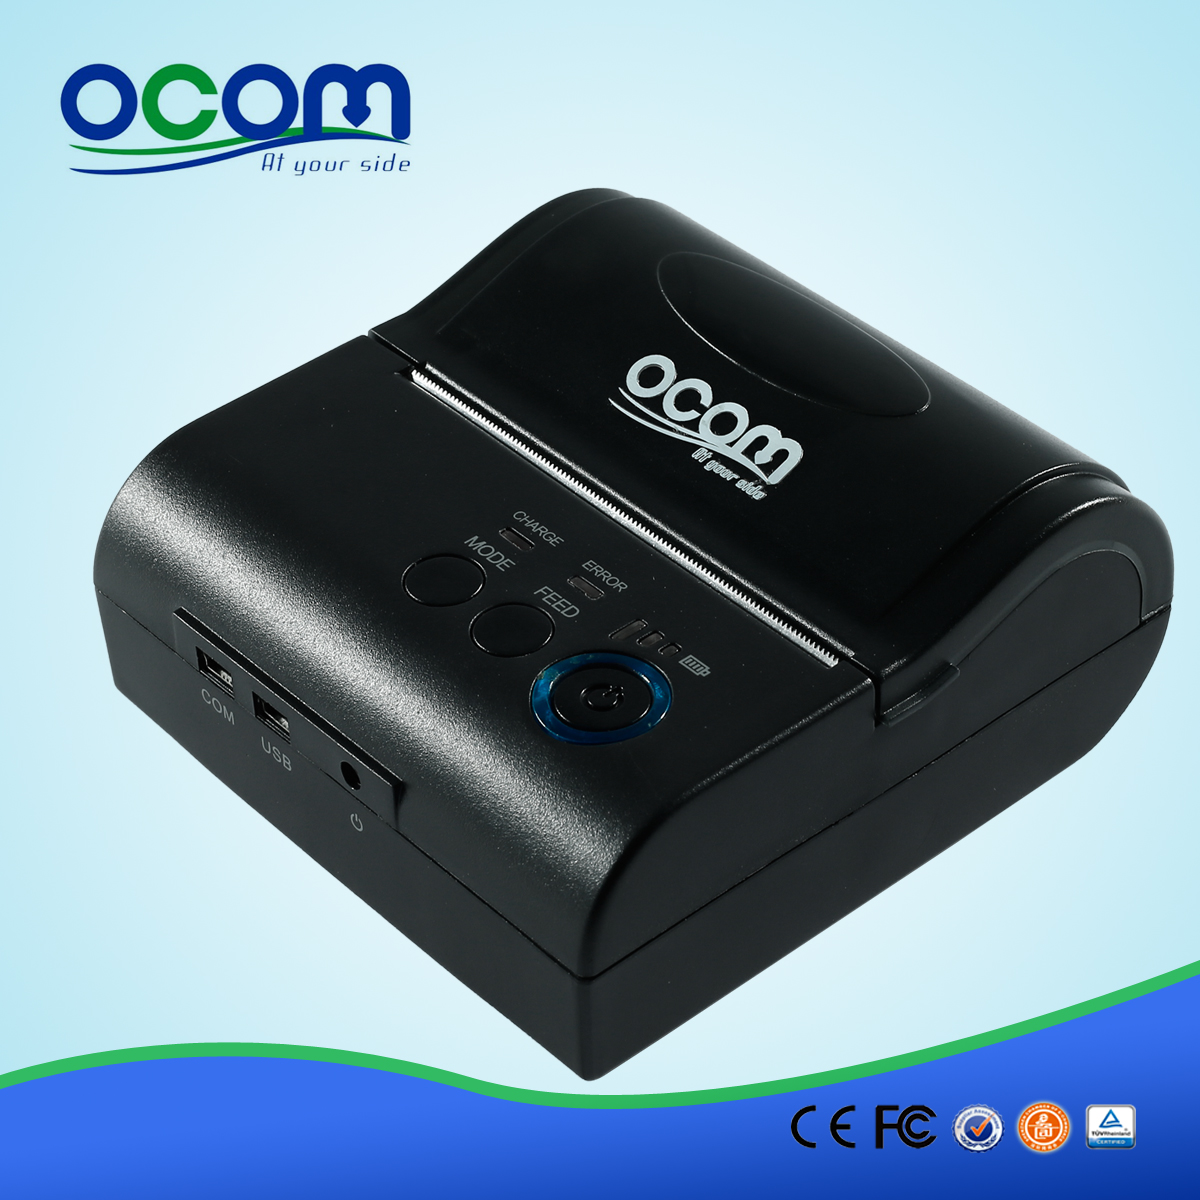 OCPP-M082: Ταξί εκτυπώσετε μια απόδειξη με την κομψή εμφάνιση 80 mm θερμικό εκτυπωτή Bluetooth